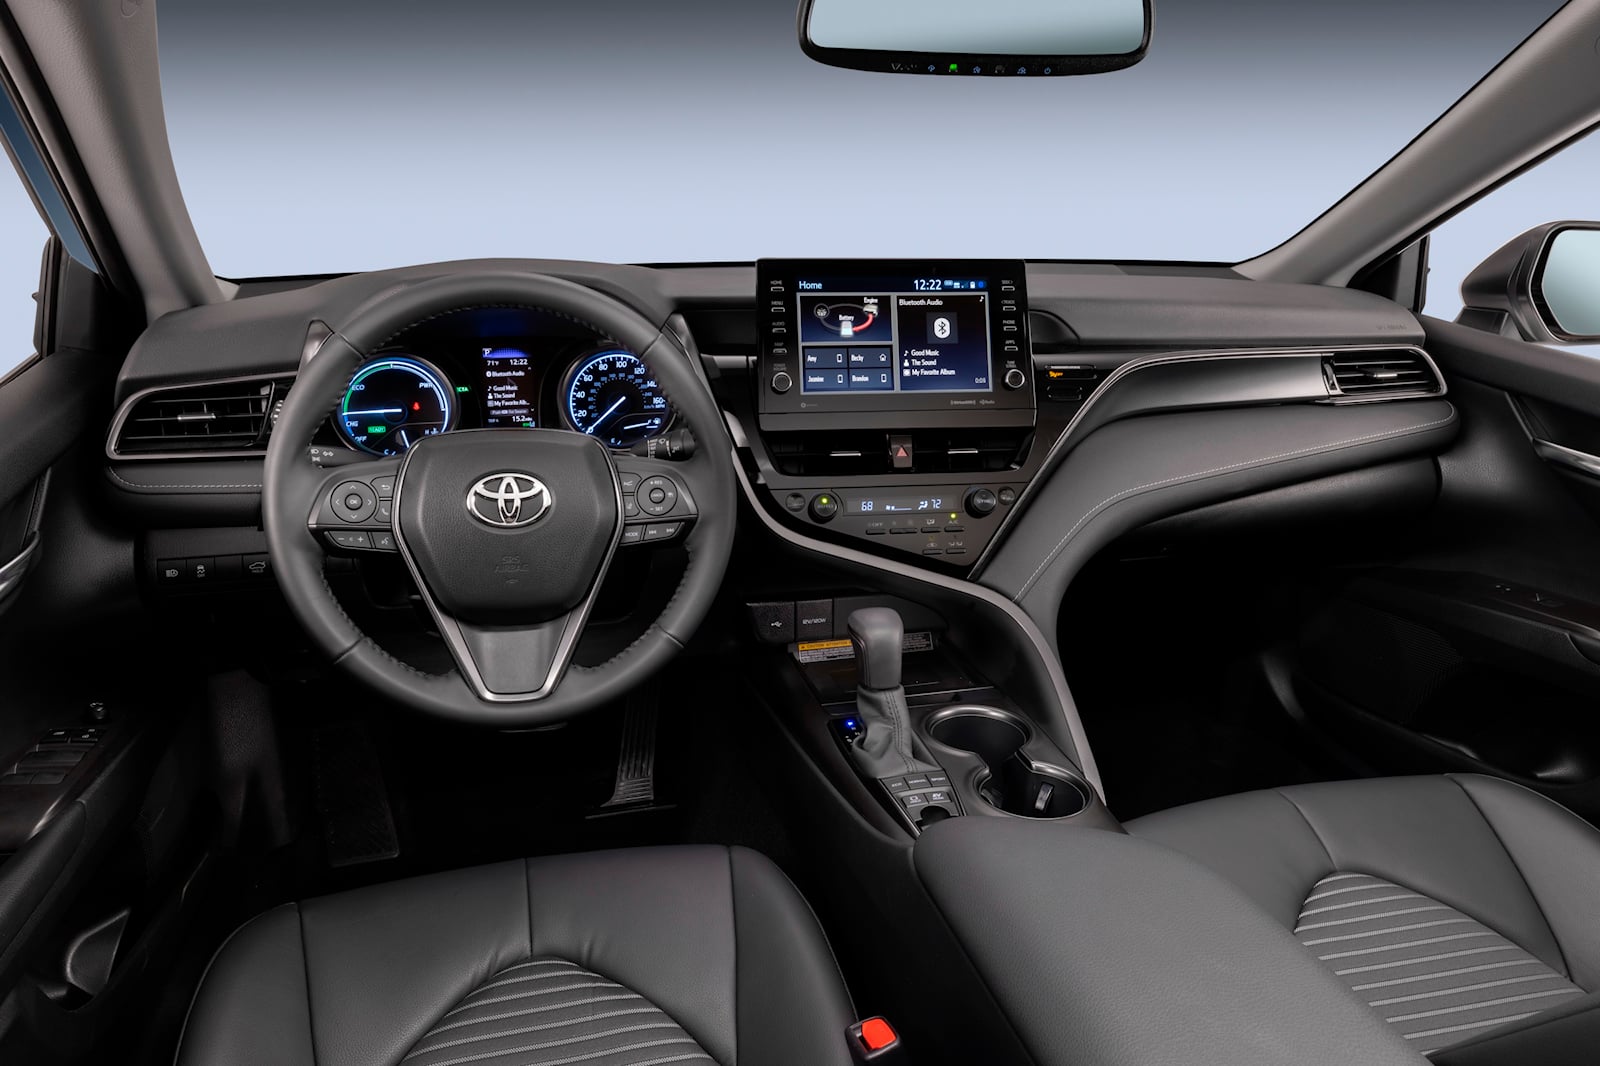 2019 Toyota Camry Hybrid exterior & interior detailed in a walkaround  video